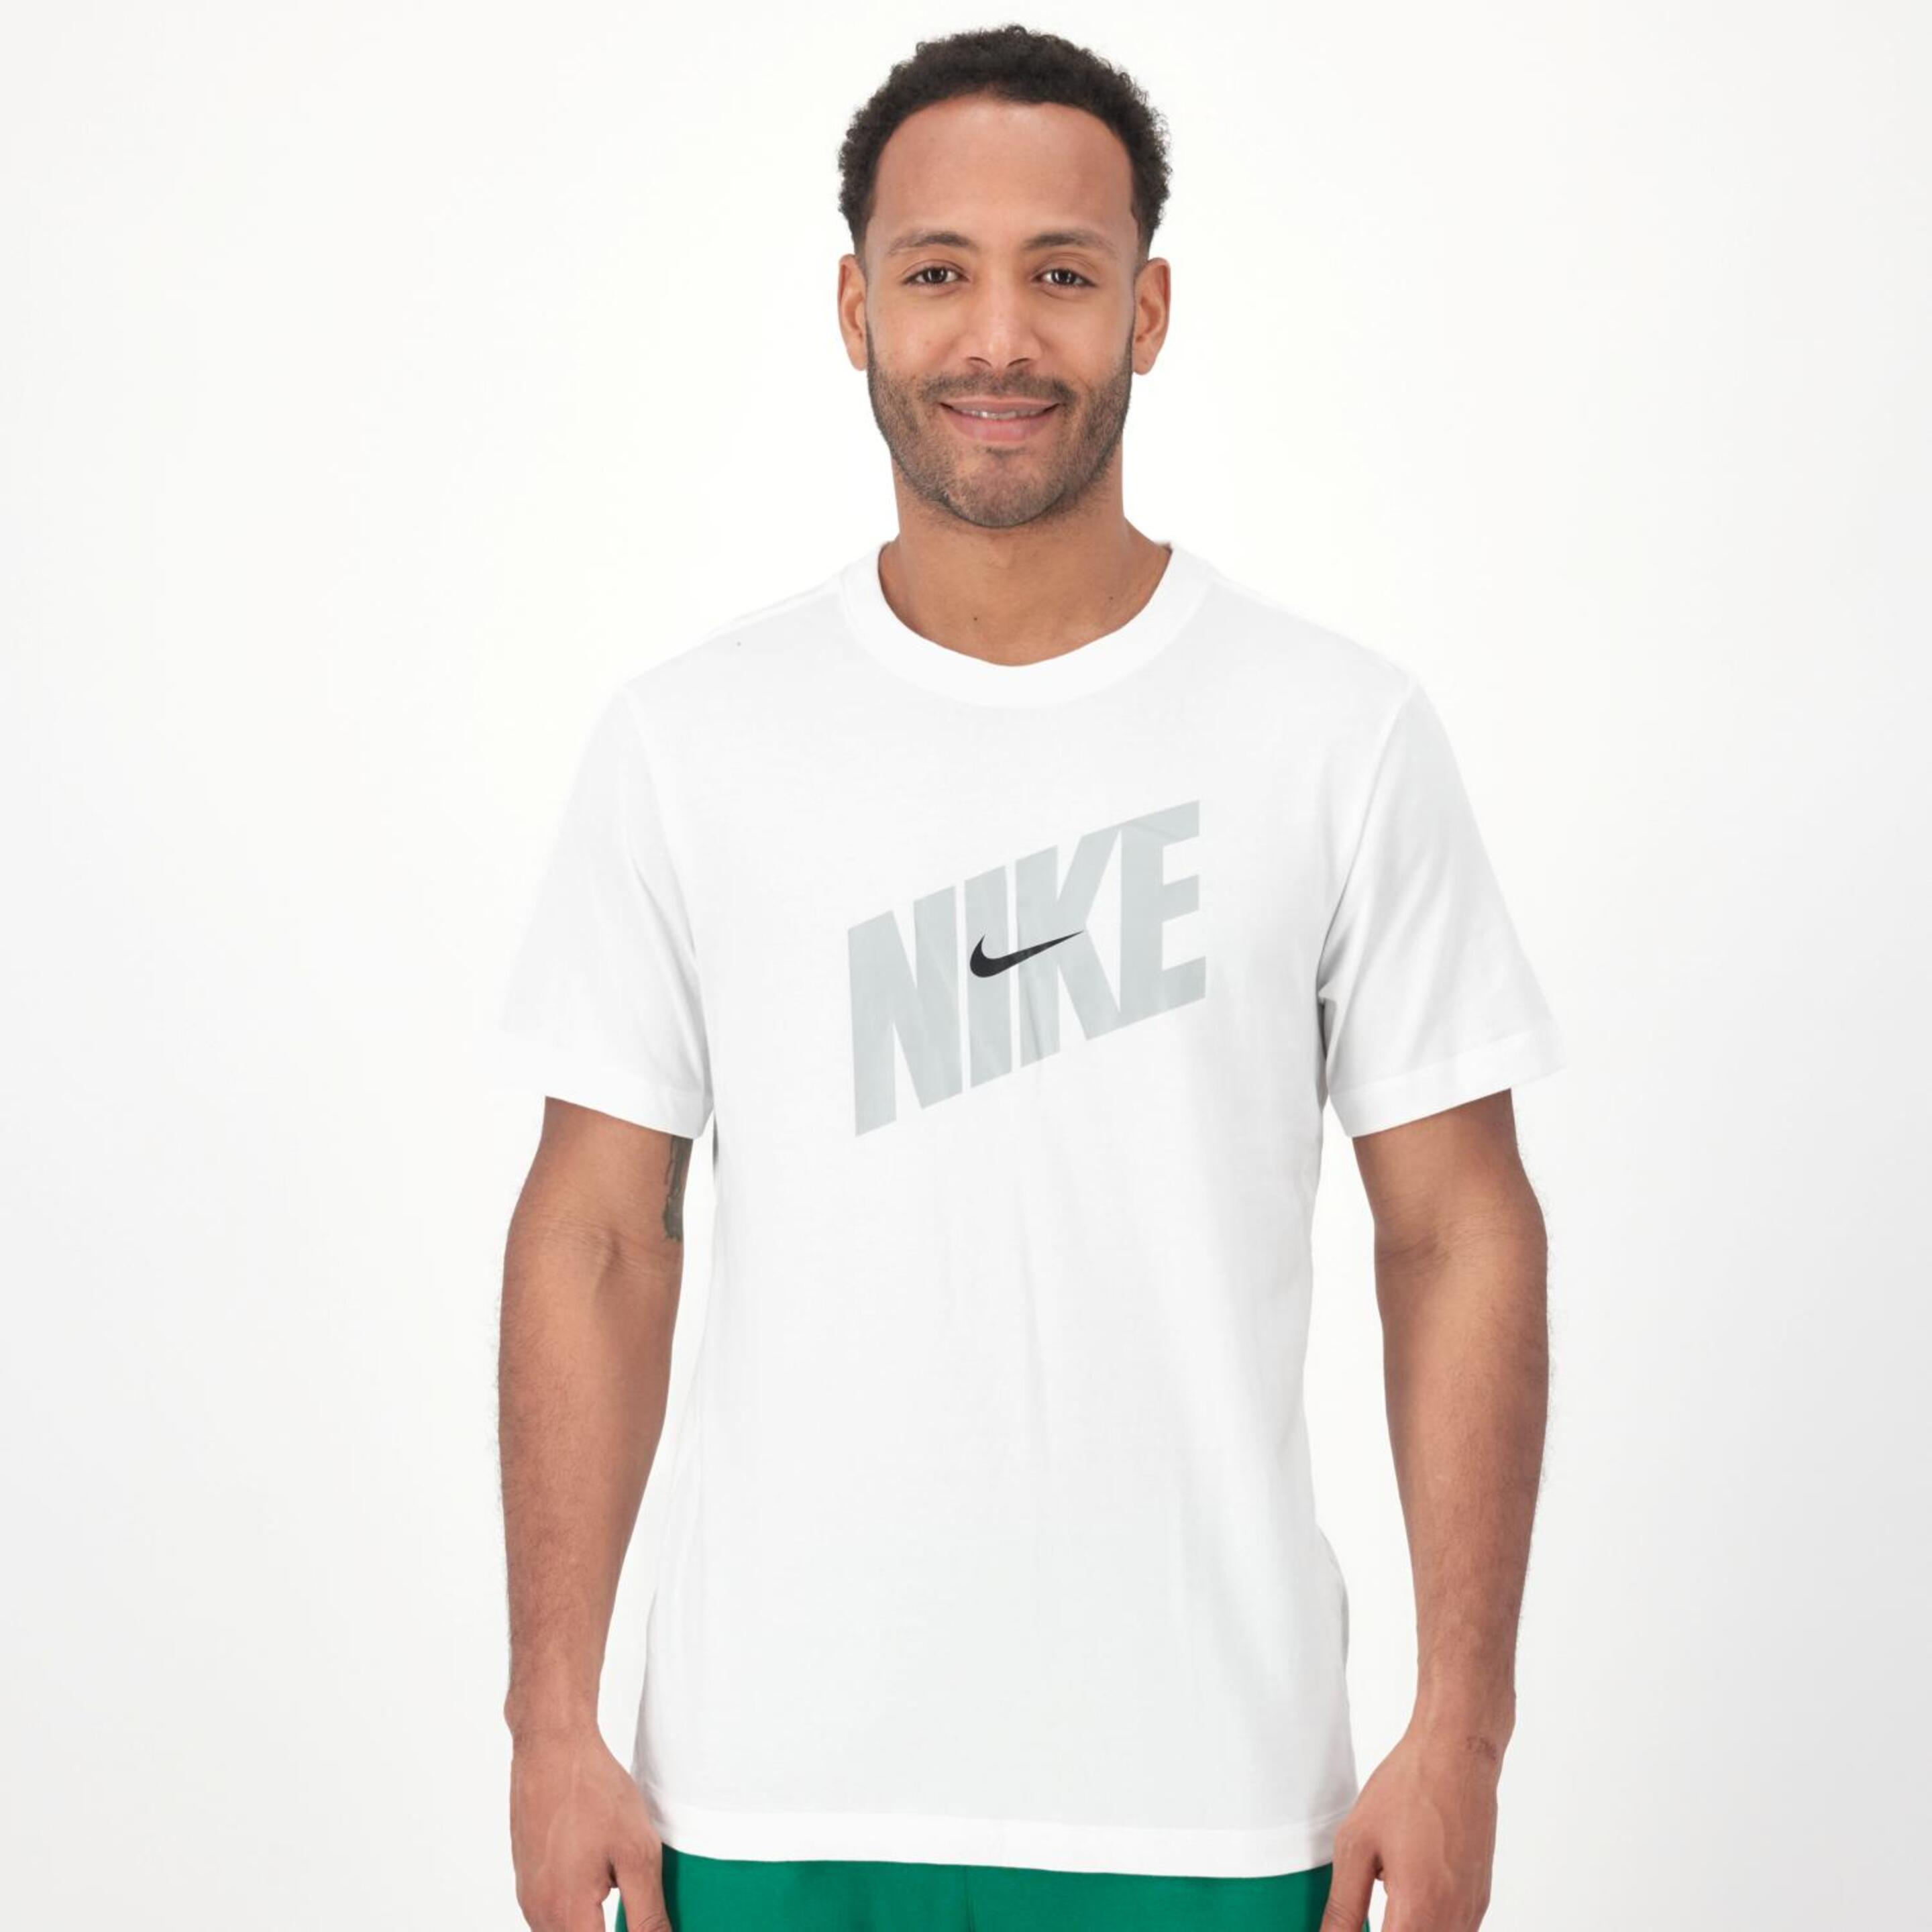 Camiseta Nike - blanco - Camiseta Running Hombre